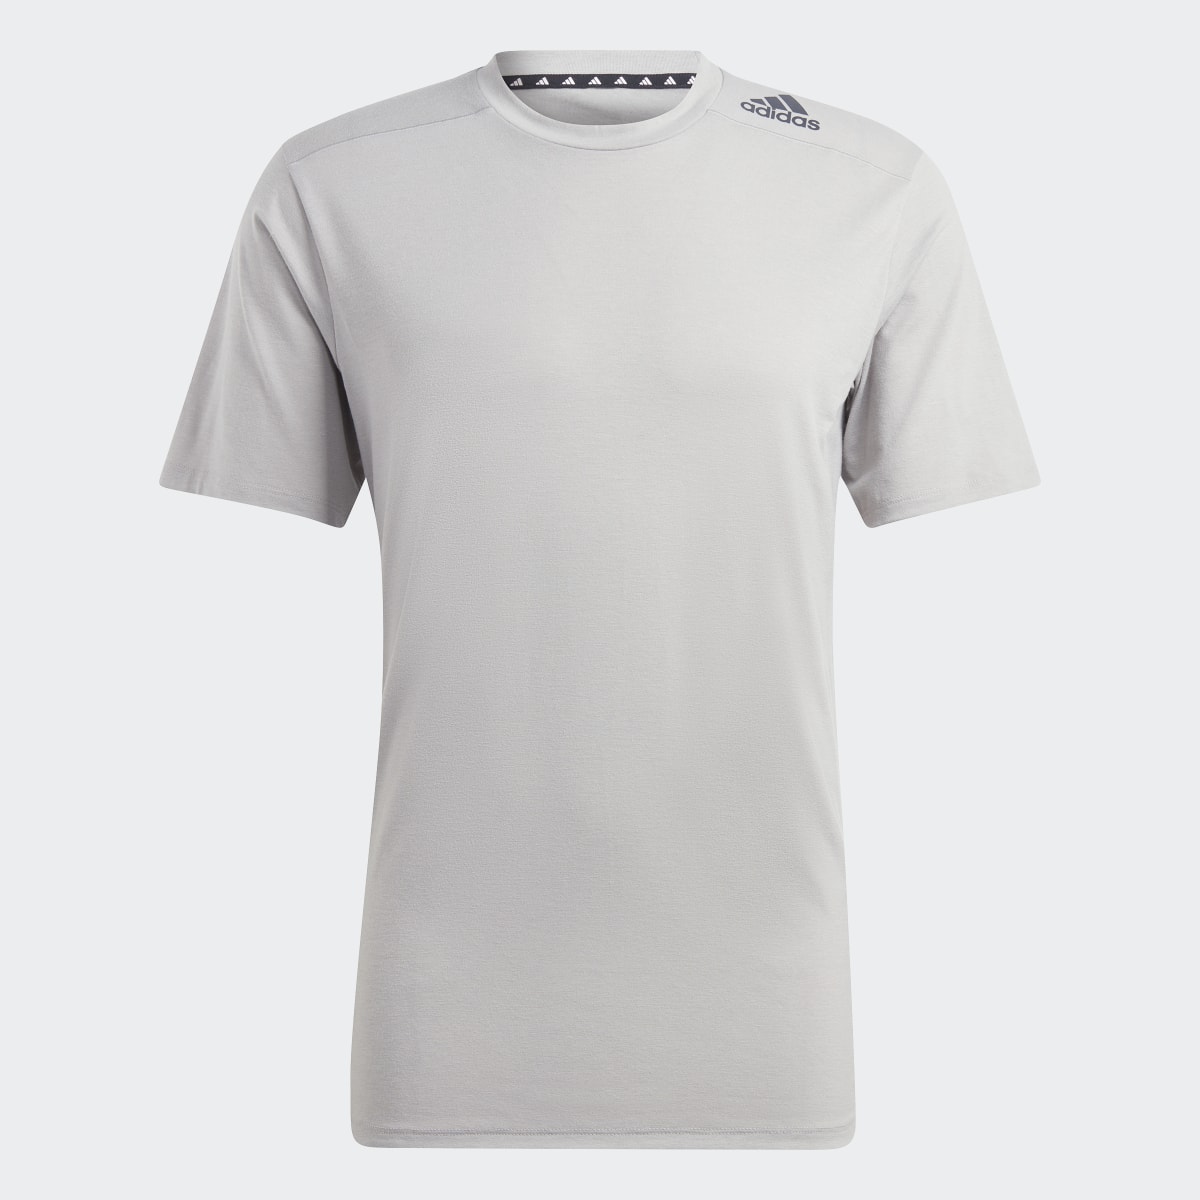 Adidas T-shirt Designed for Training. 5